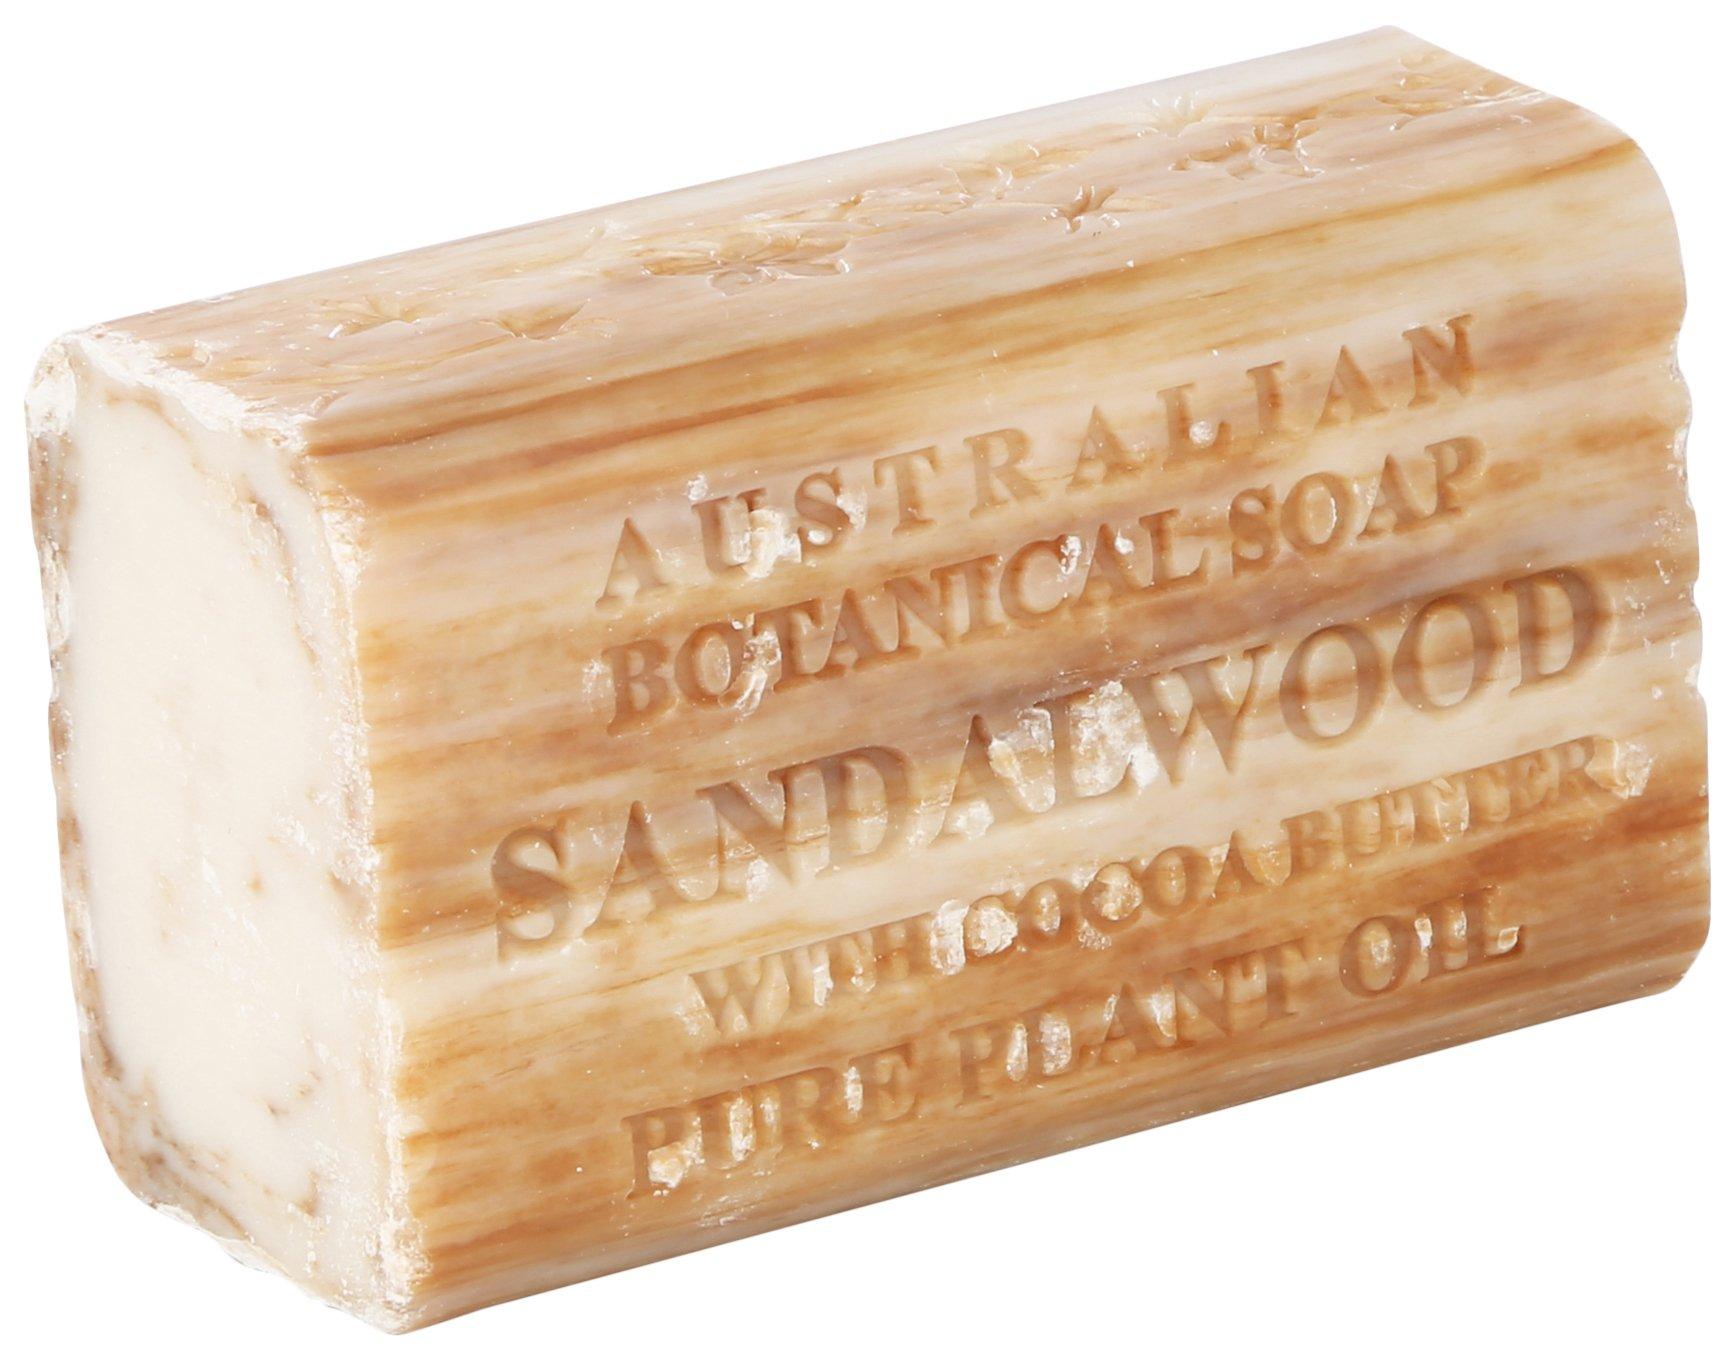 Australian Botanical 6.6 Oz. Sandalwood Bar Soap